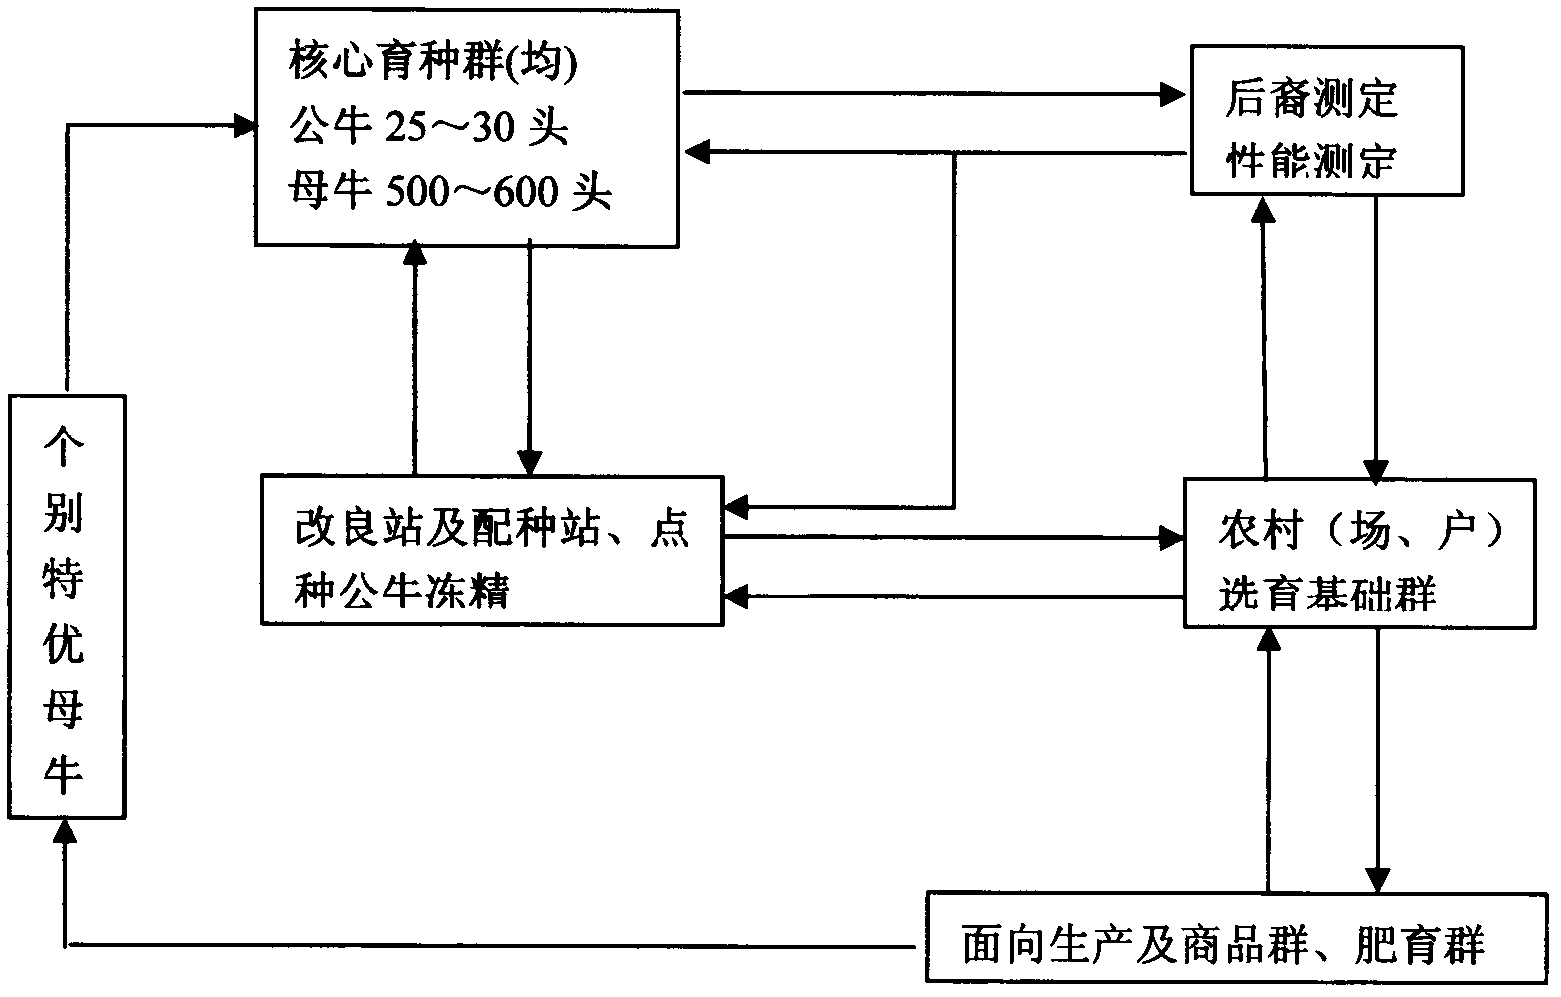 Standardized production method of Xizhen cattle